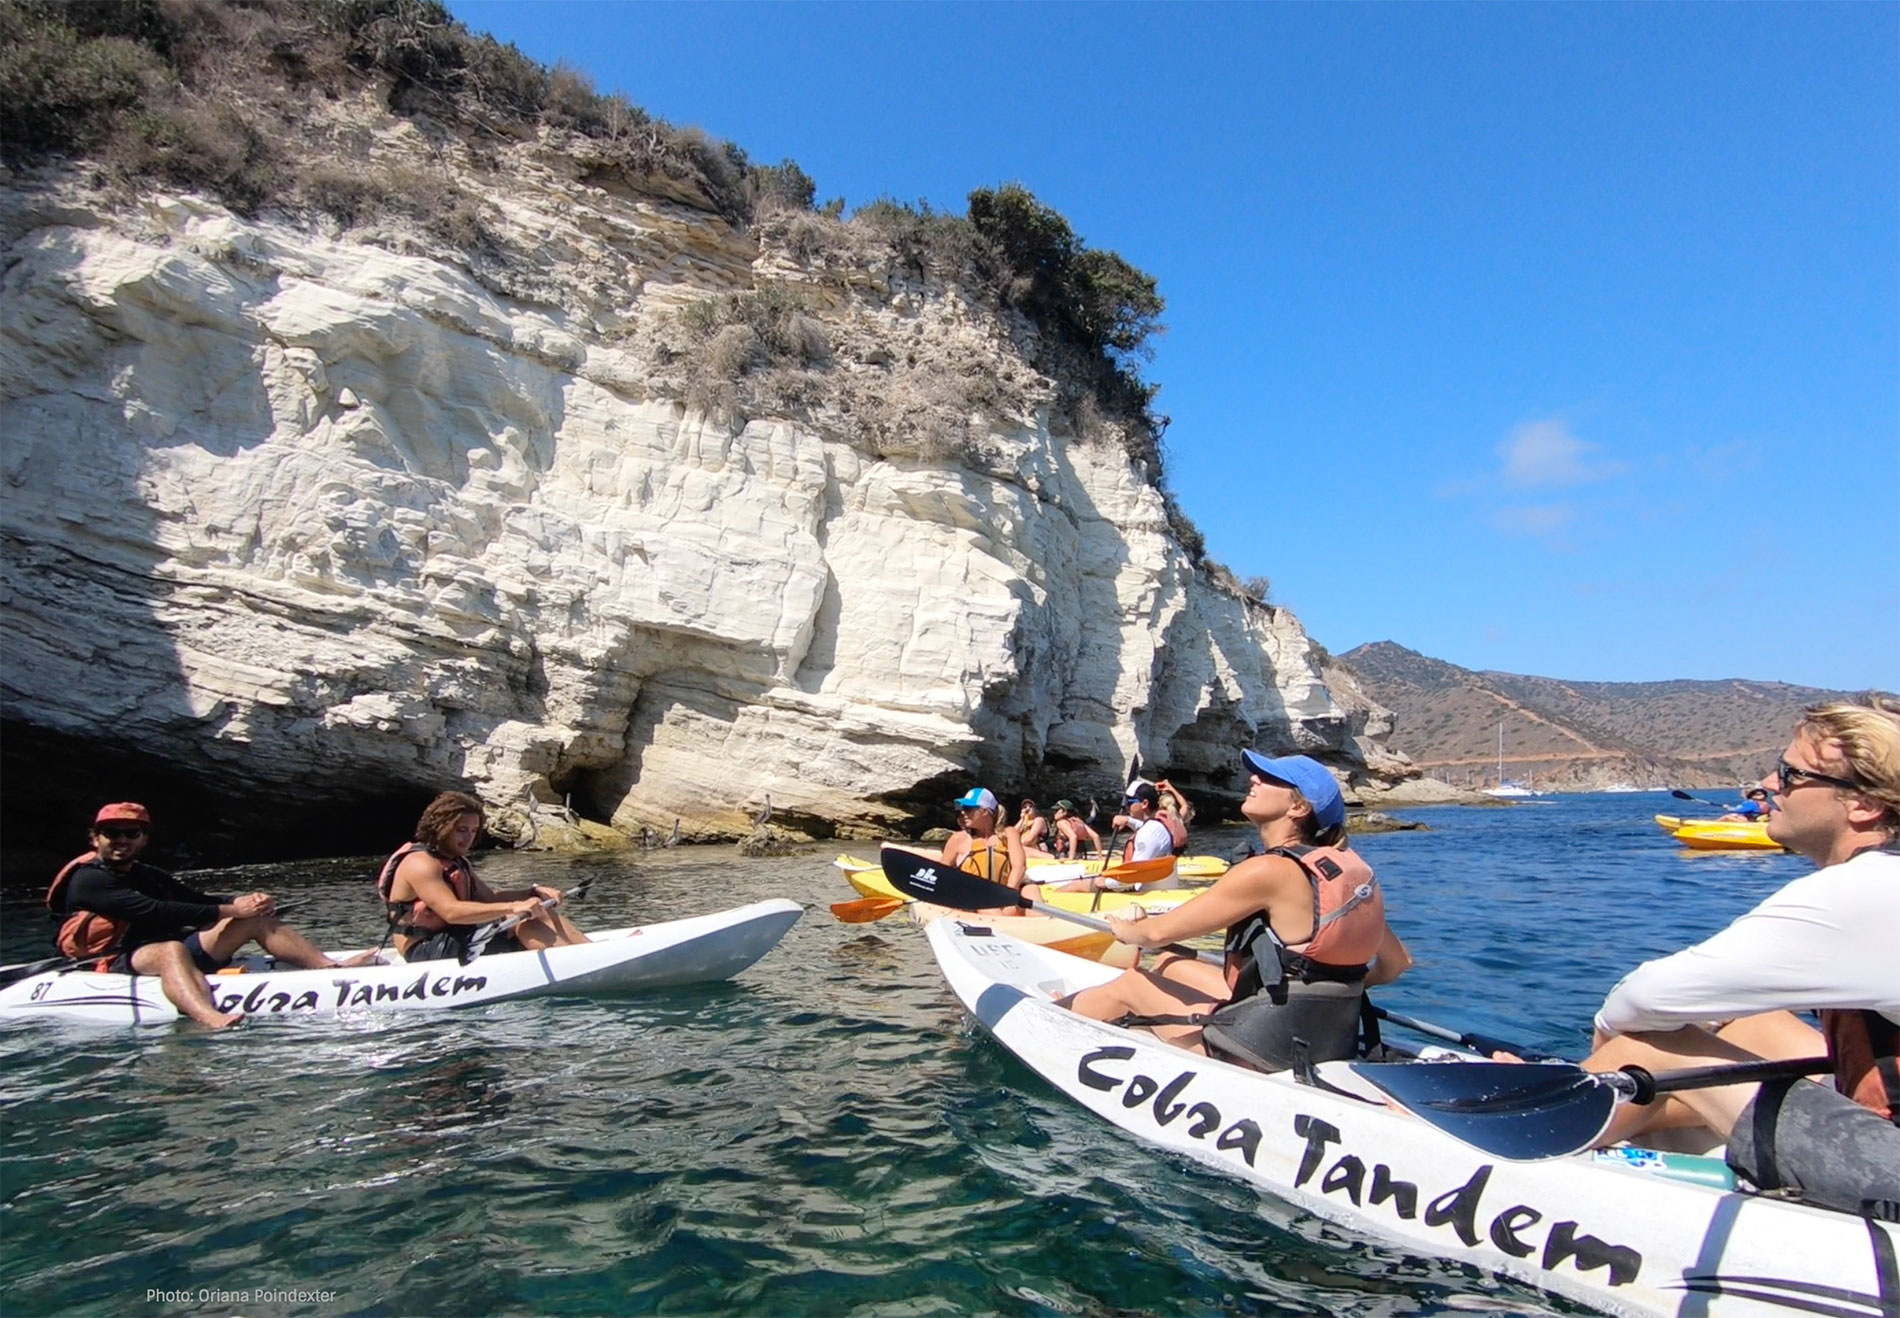 Students paddle kayaks next to Catalina Island cliffs.